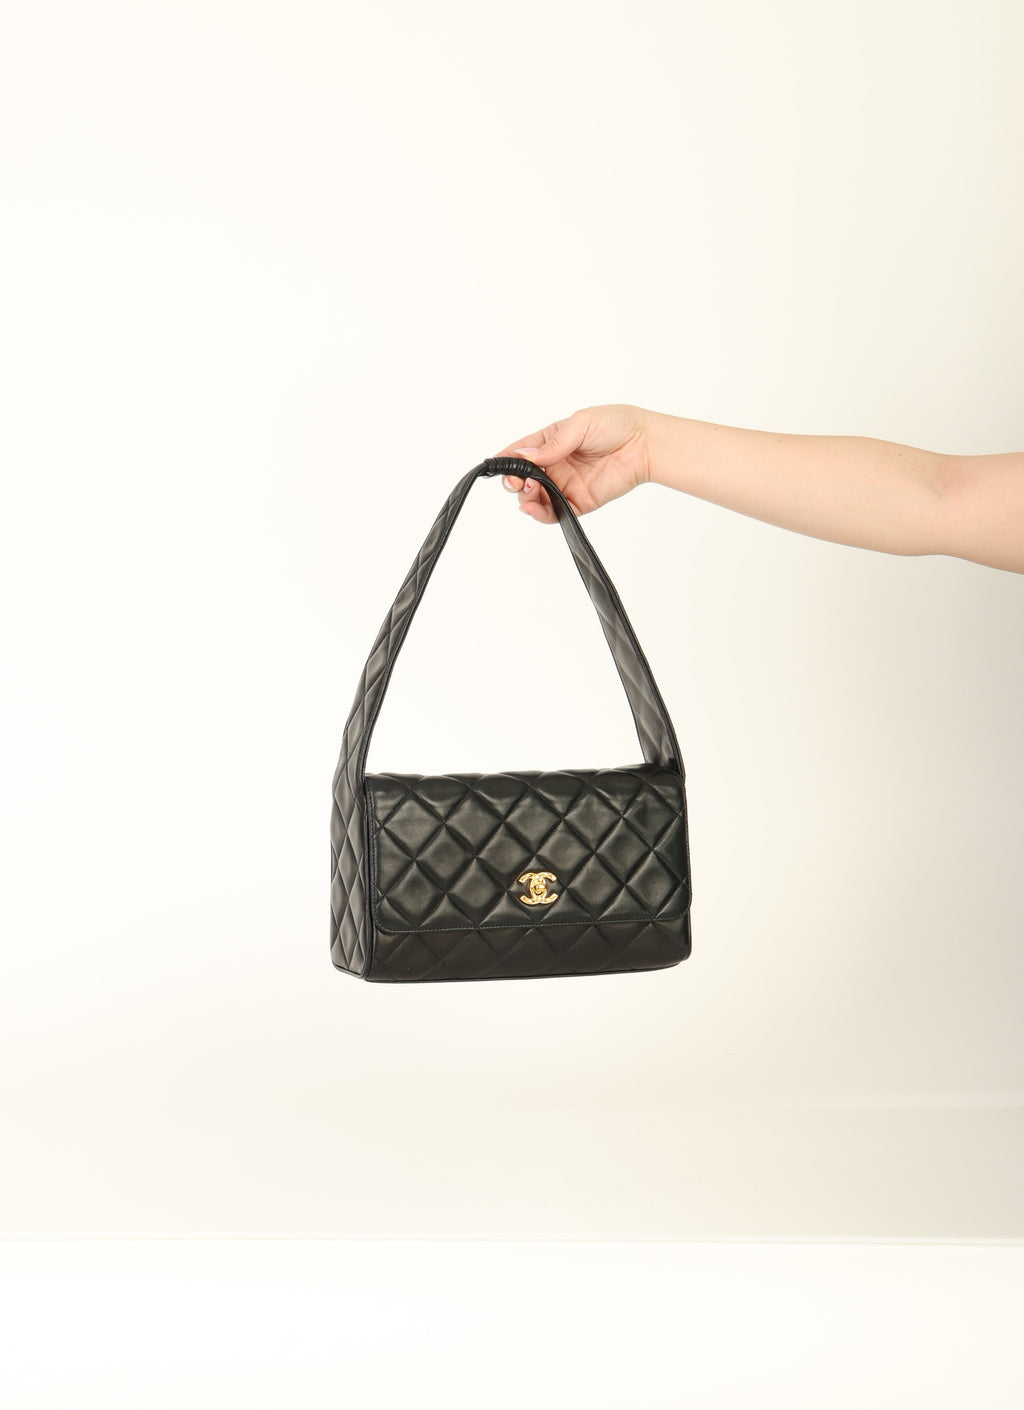 Chanel 1991 Lambskin Coco Crush Shoulder Bag